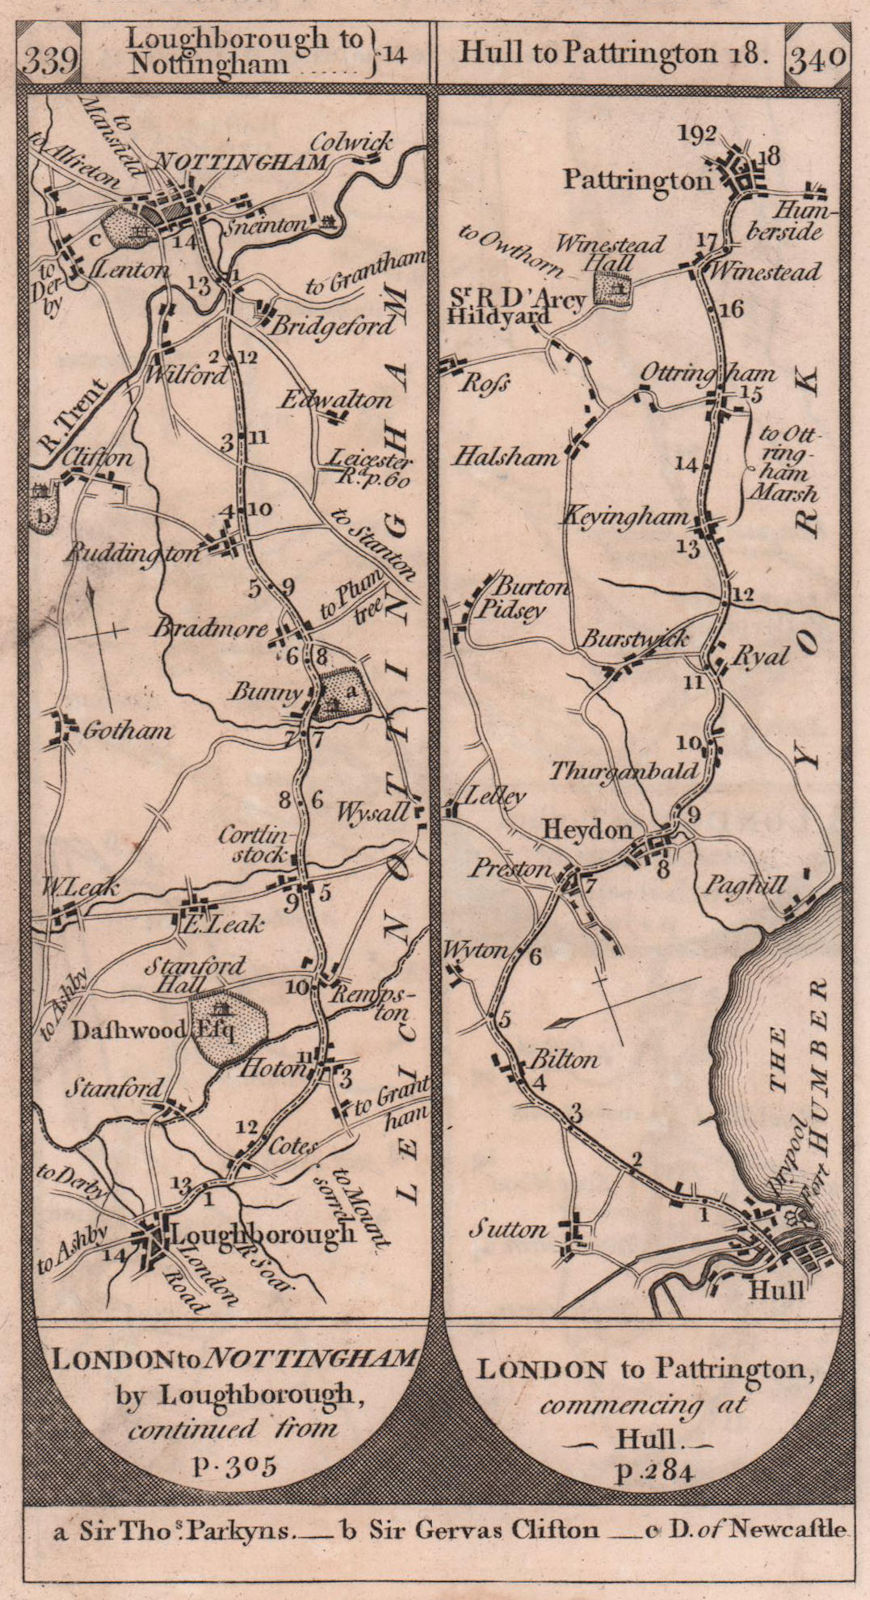 Associate Product Loughborough-Nottingham. Hull-Patrington road strip map PATERSON 1803 old